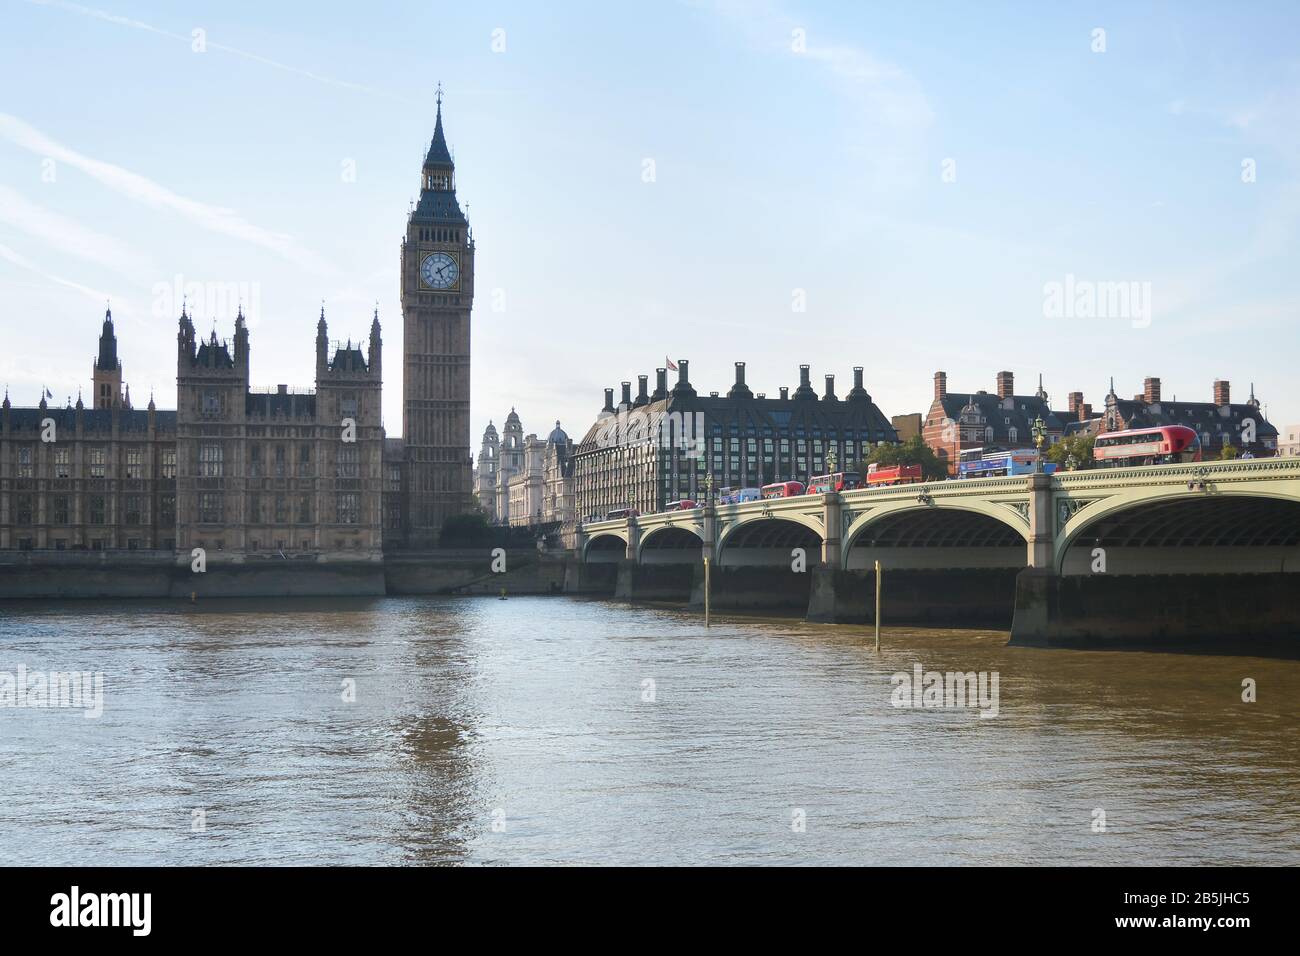 Londra in Inghilterra, 14 marzo 2020: Westminster Parliament, Big ben e il Tamigi Foto Stock